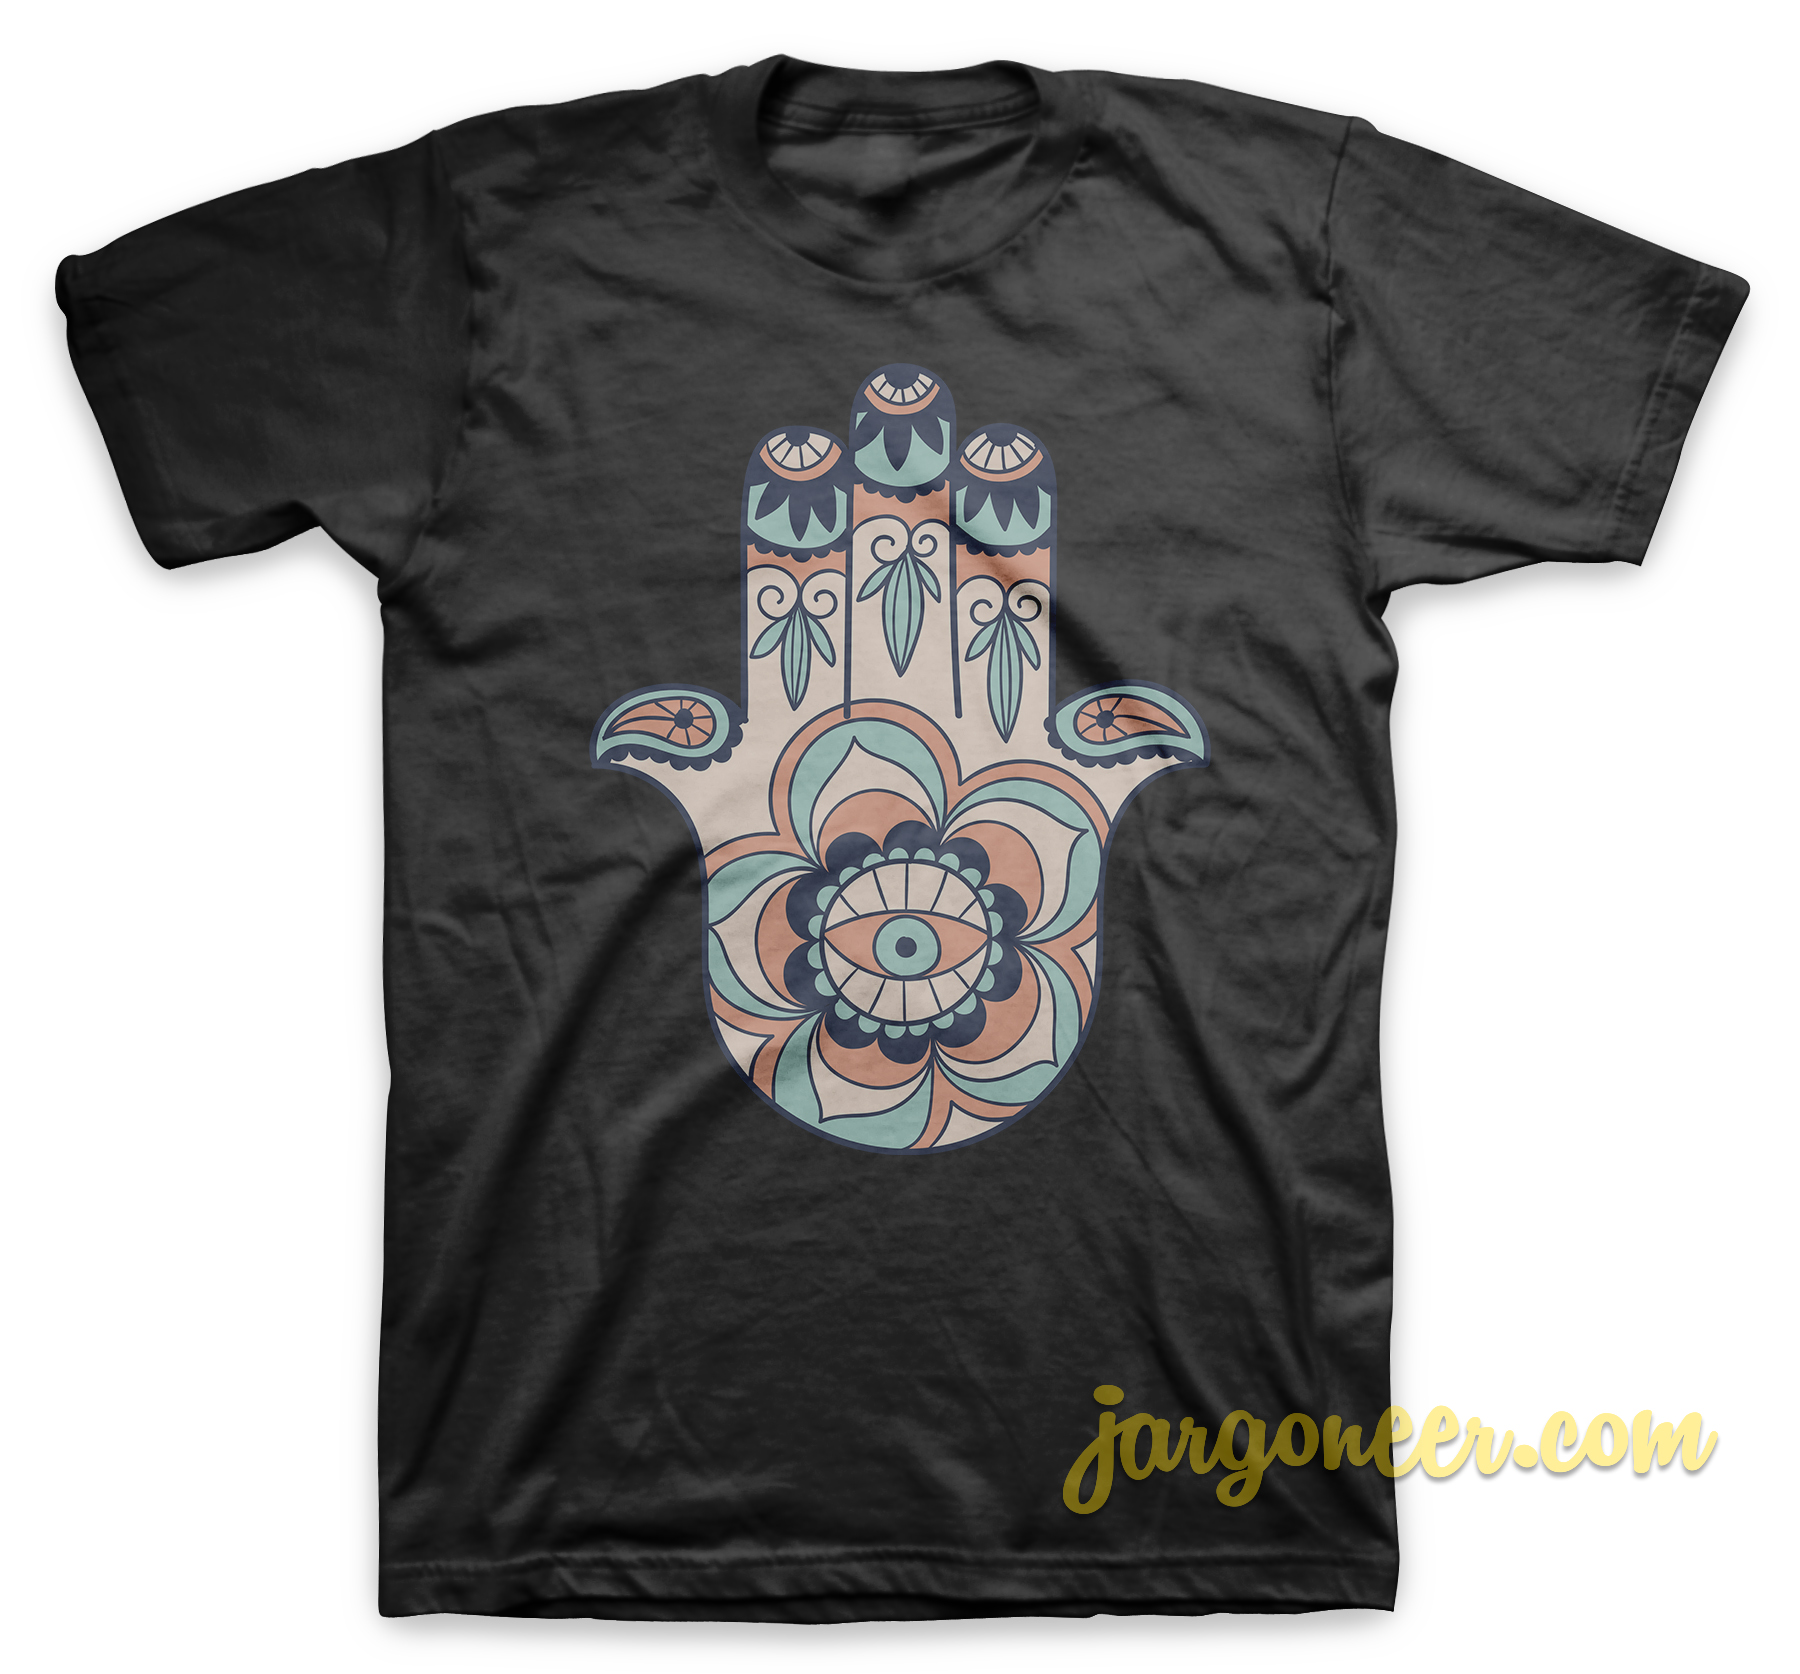 The Hand Of Fatima Black T Shirt - Shop Unique Graphic Cool Shirt Designs